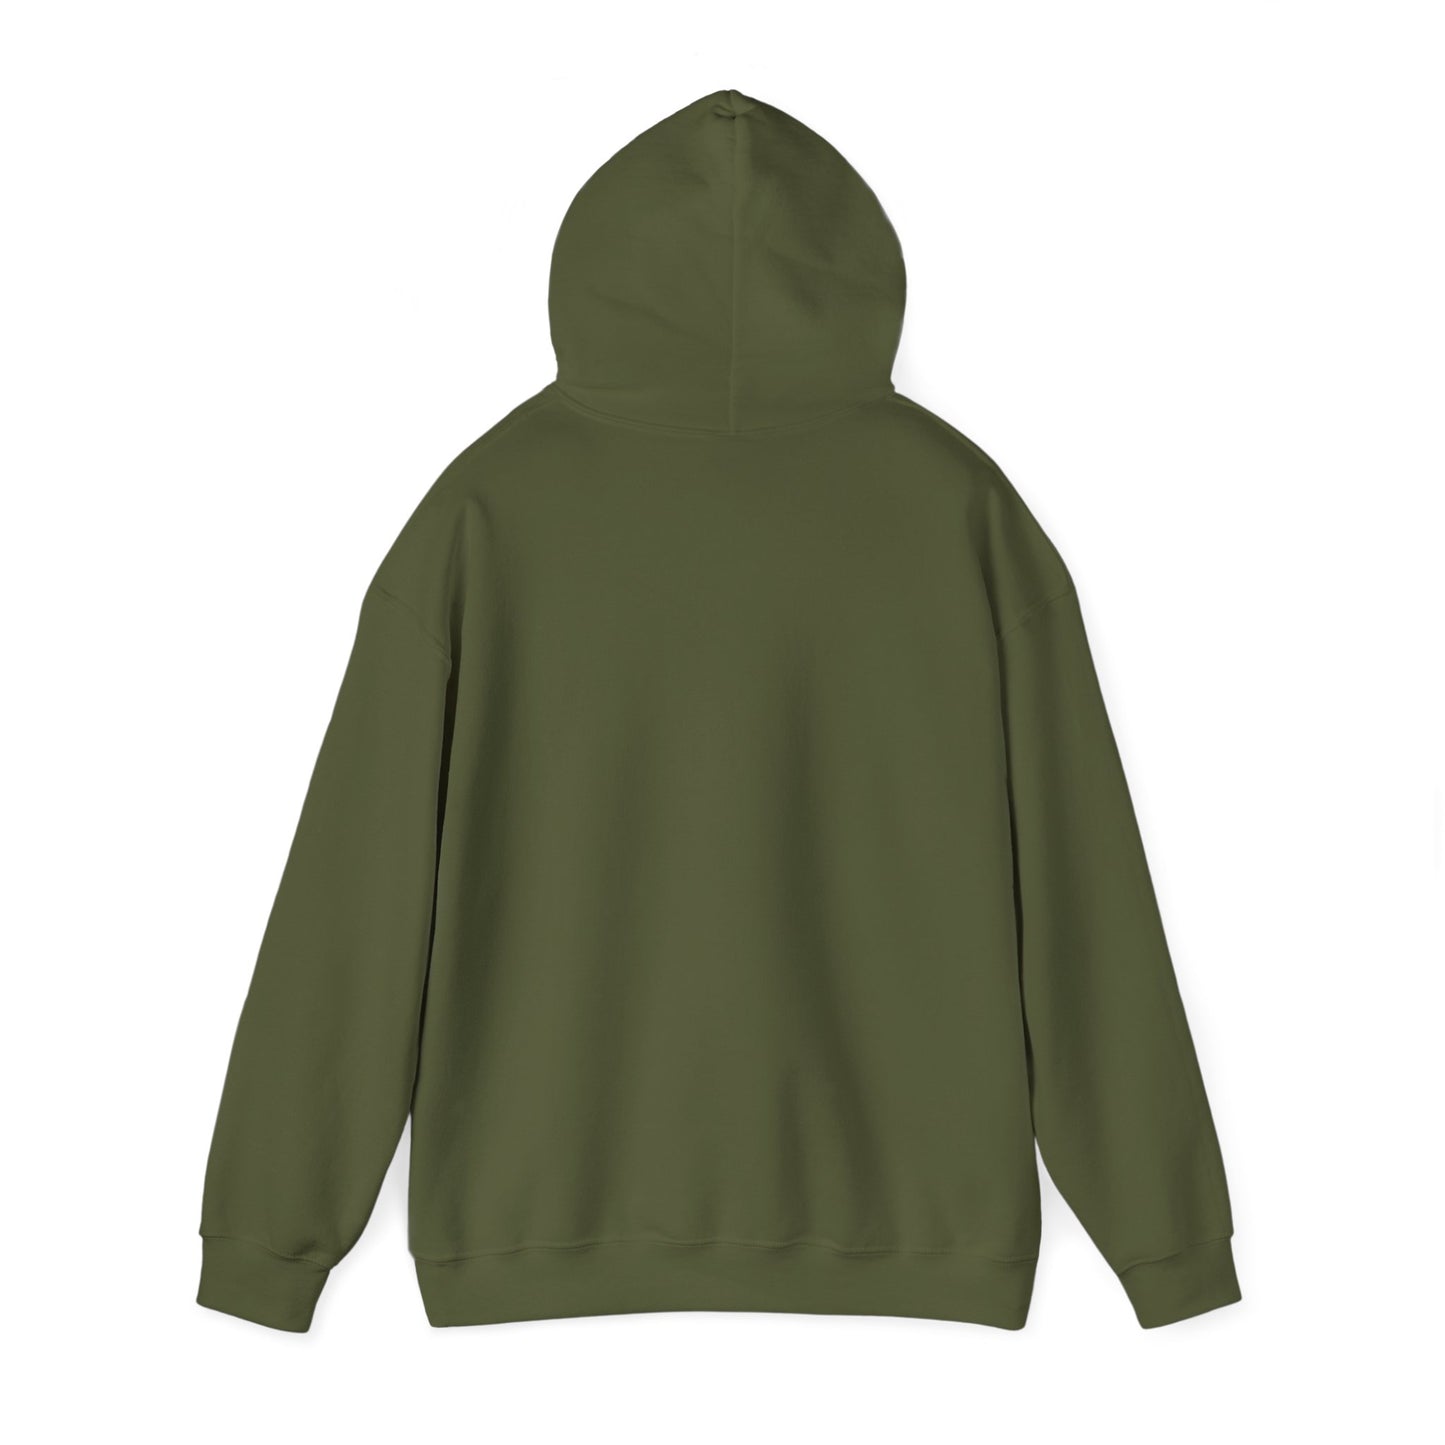 Explore More Hooded Sweatshirt